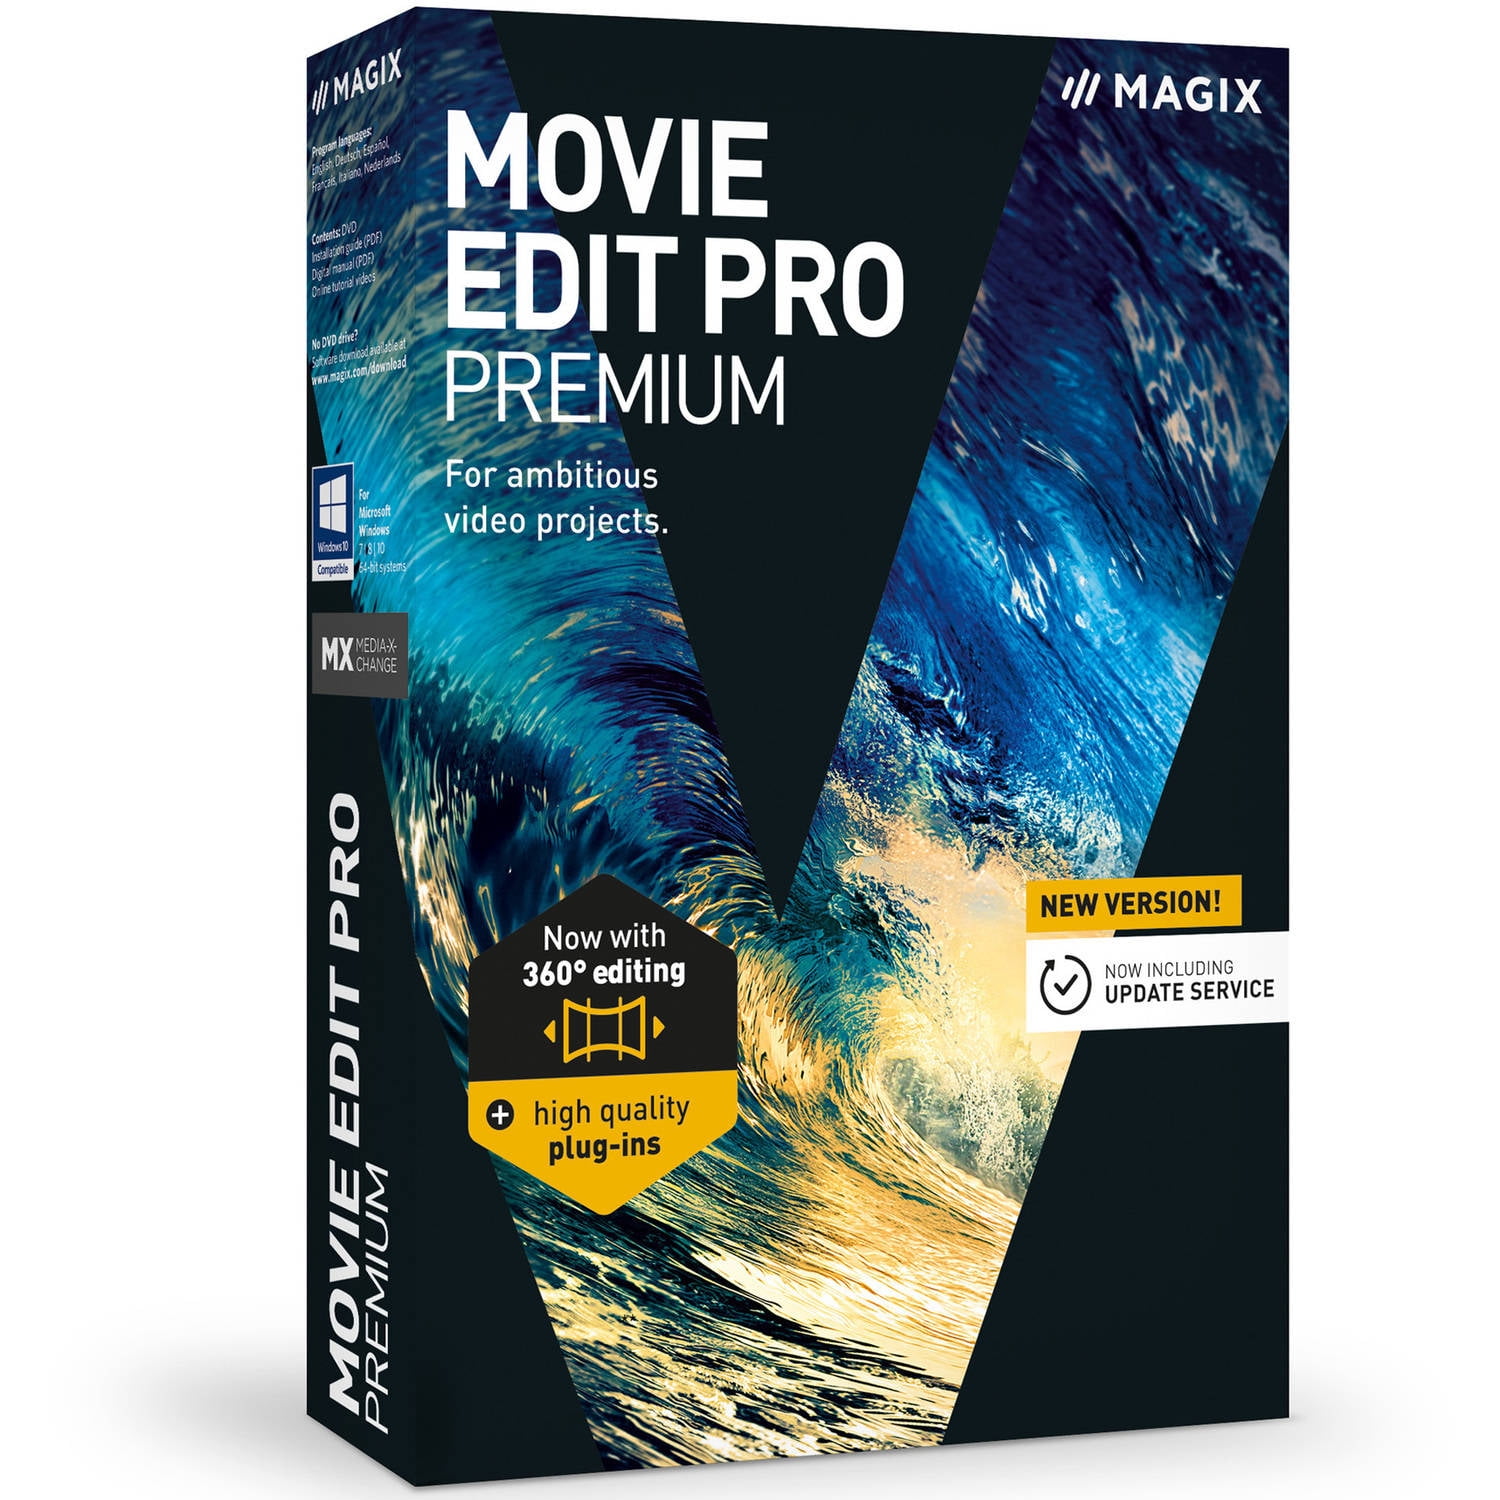 Madison Albany vino Magix Software ANR005983ESD Magix Movie Edit Pro Premium ESD (Digital Code)  - Walmart.com